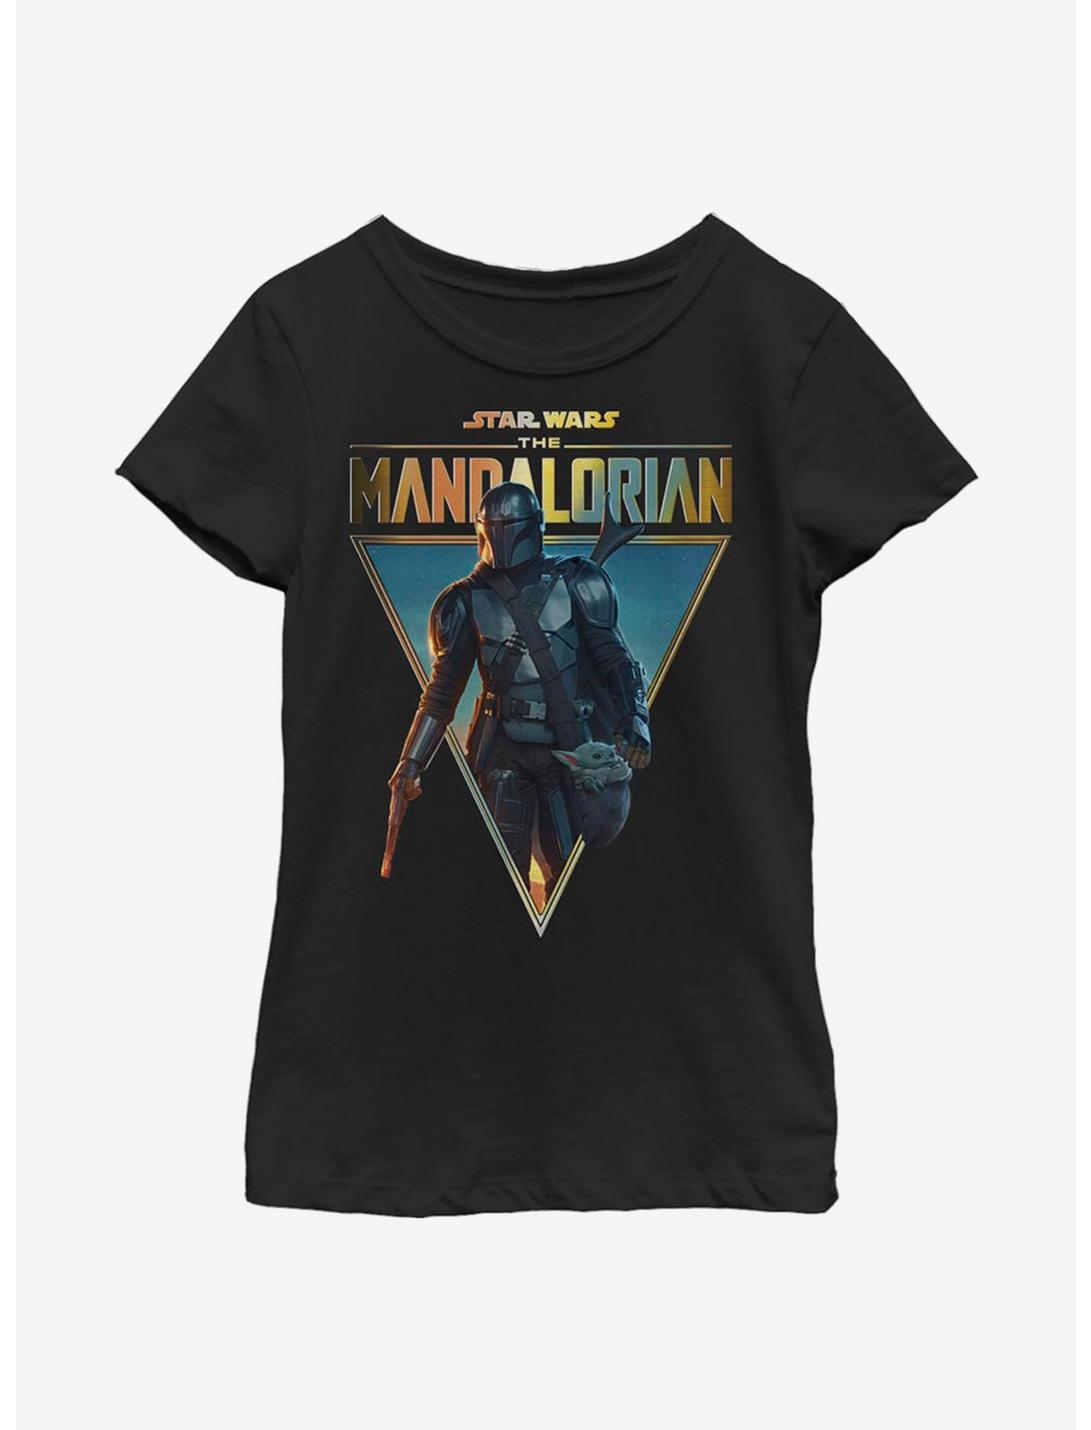 Star Wars The Mandalorian S02 Poster Youth Girls T-Shirt, BLACK, hi-res